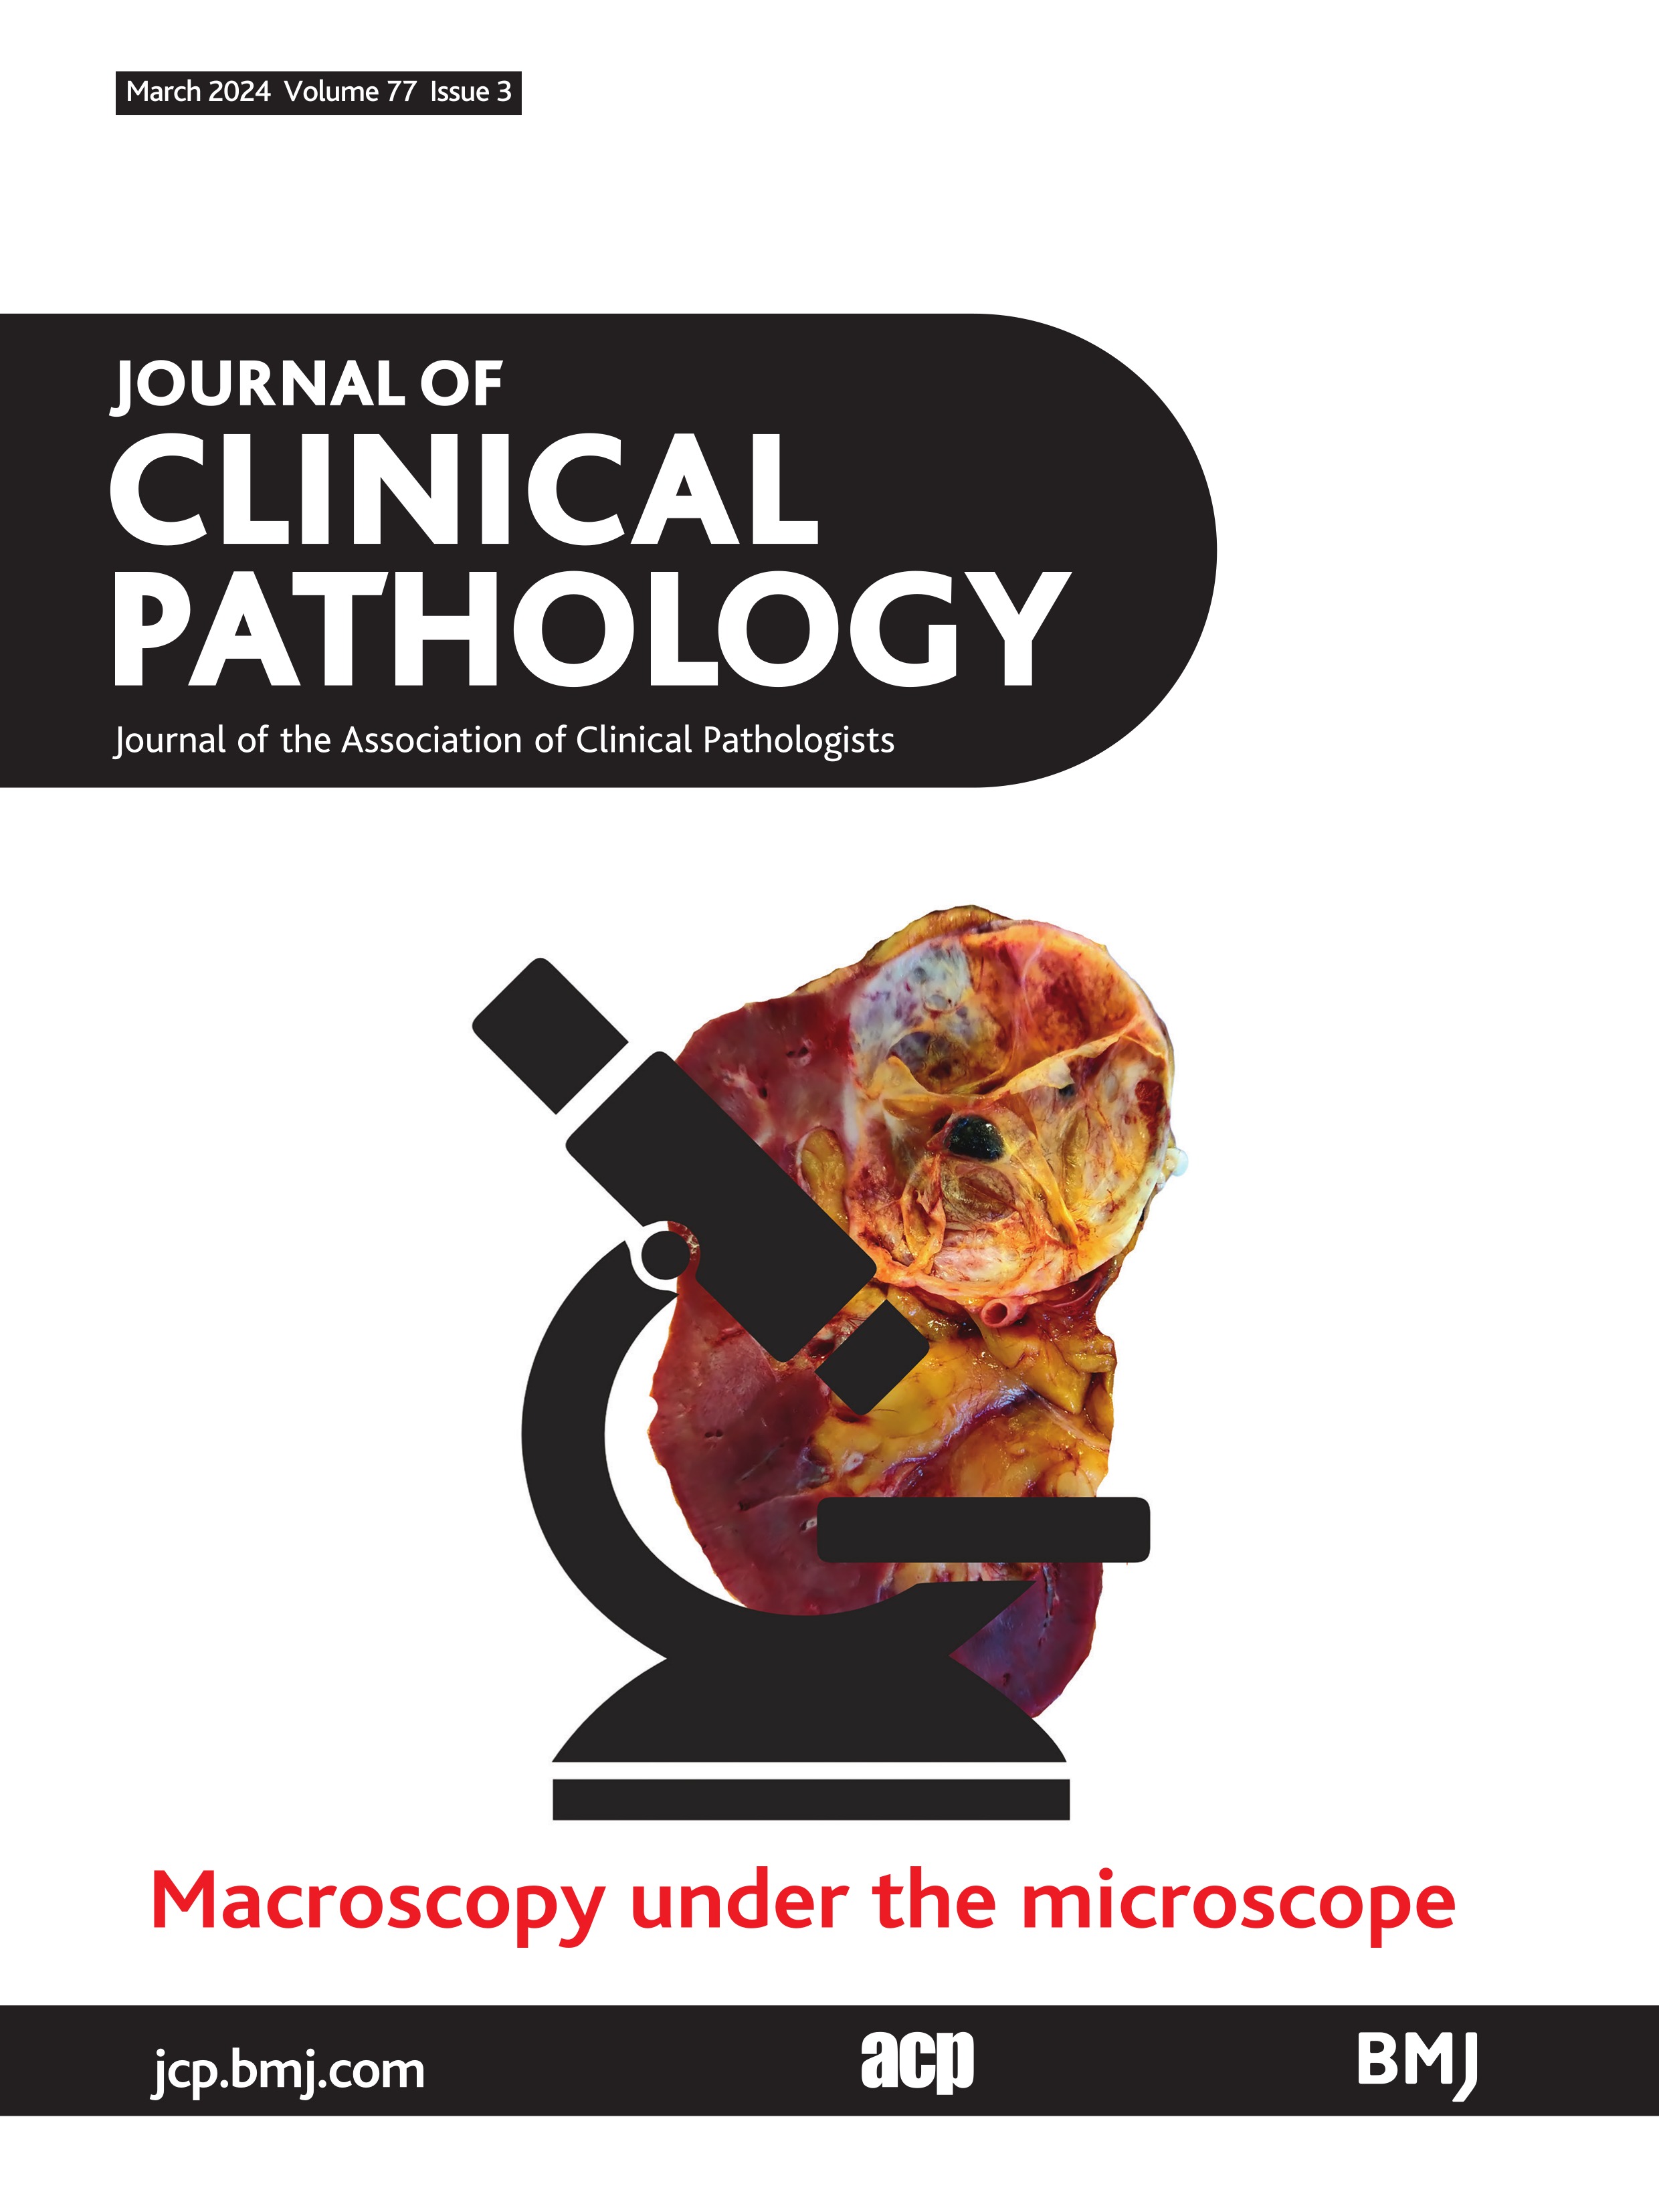 Macroscopic examination of pathology specimens: a critical reappraisal